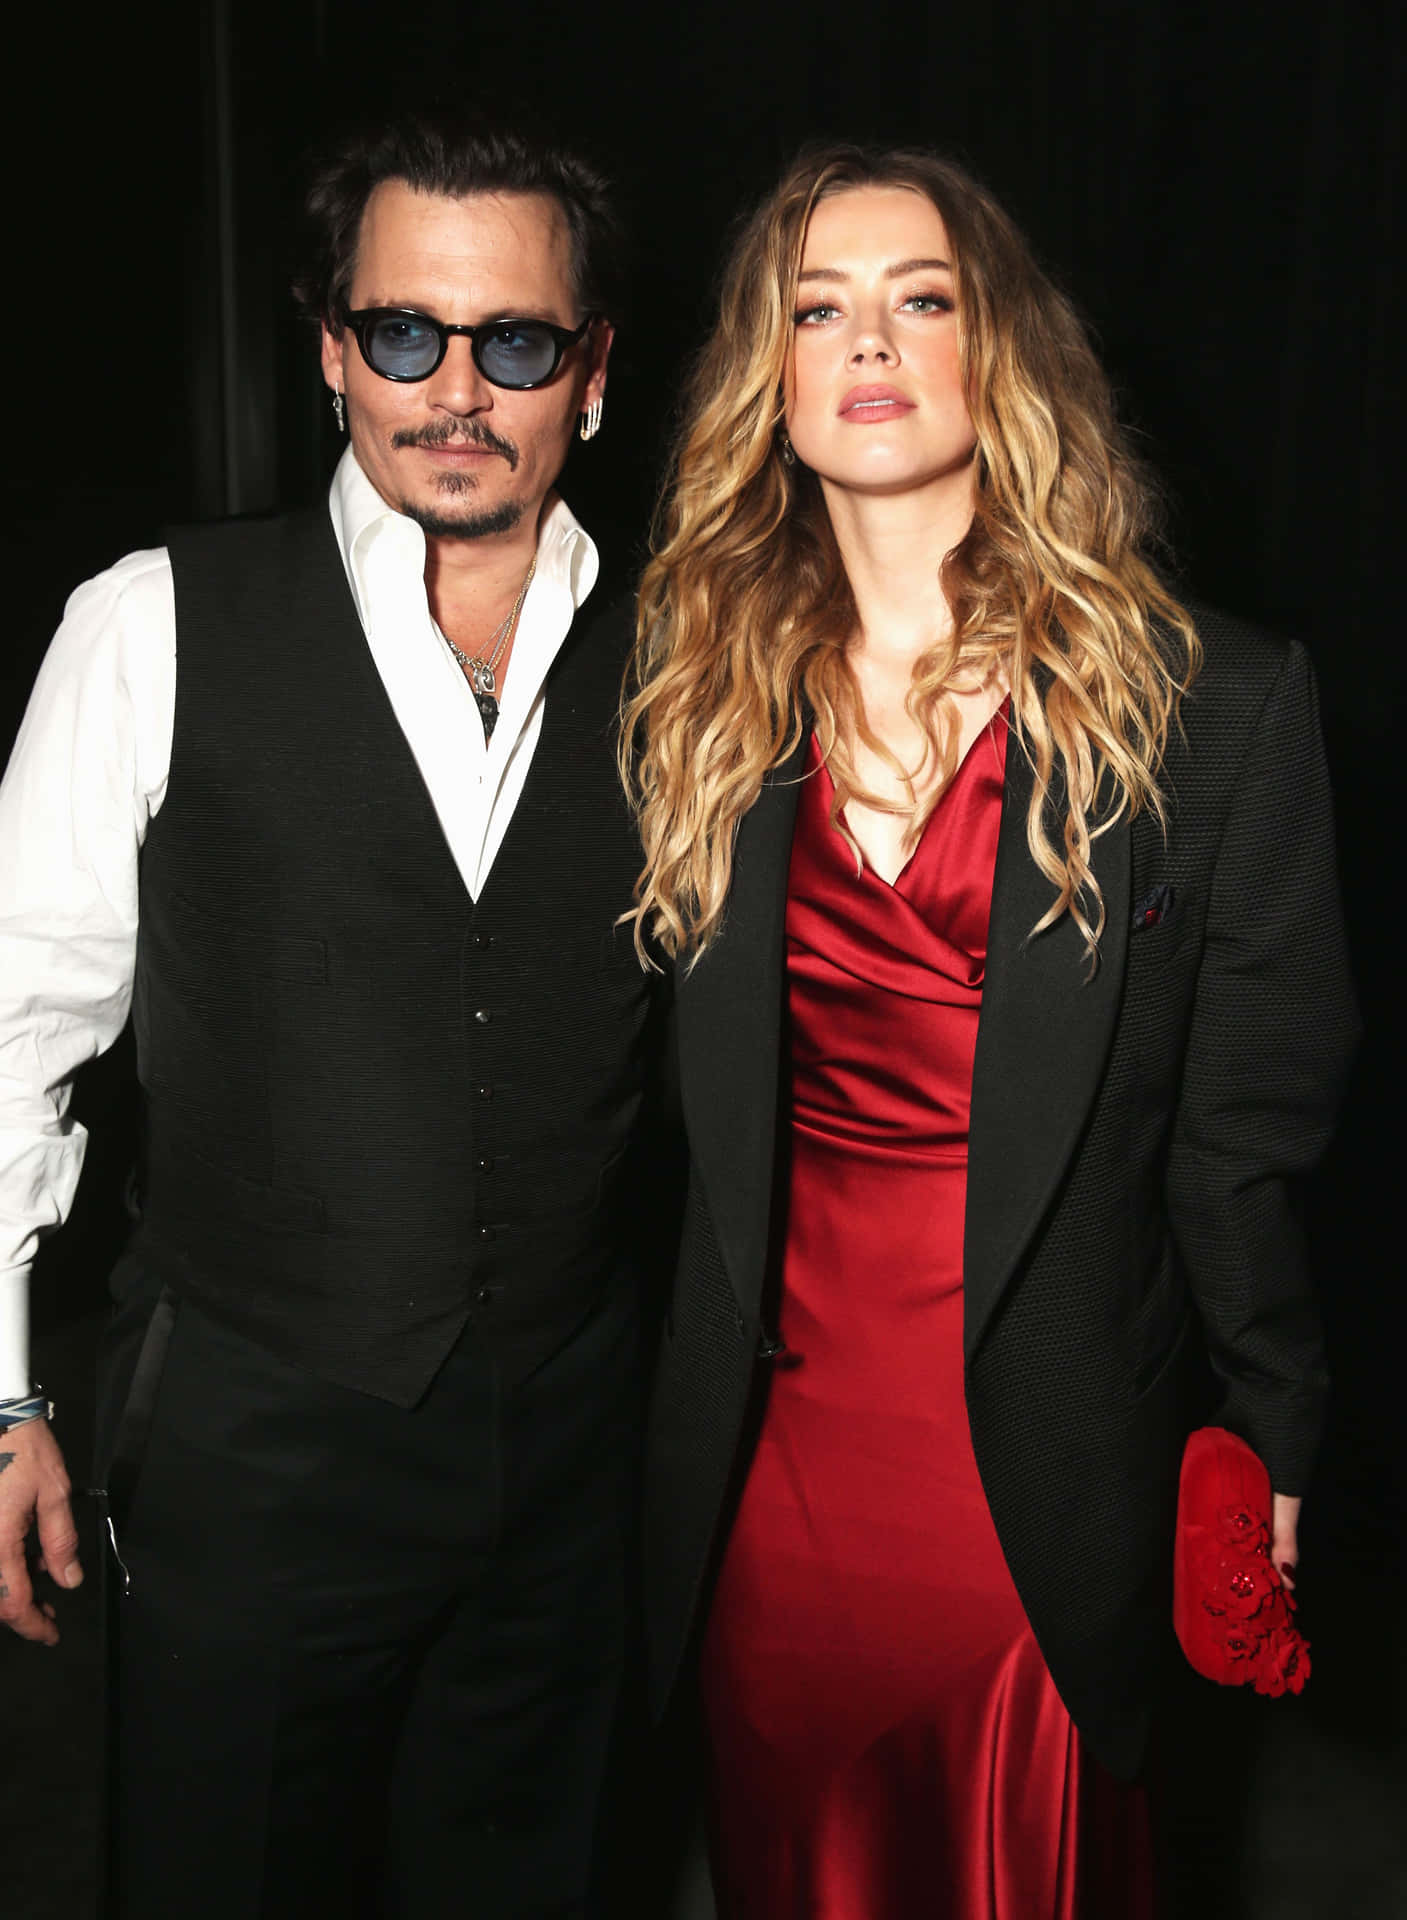 Johnny Depp and Amber Heard - Power Couple